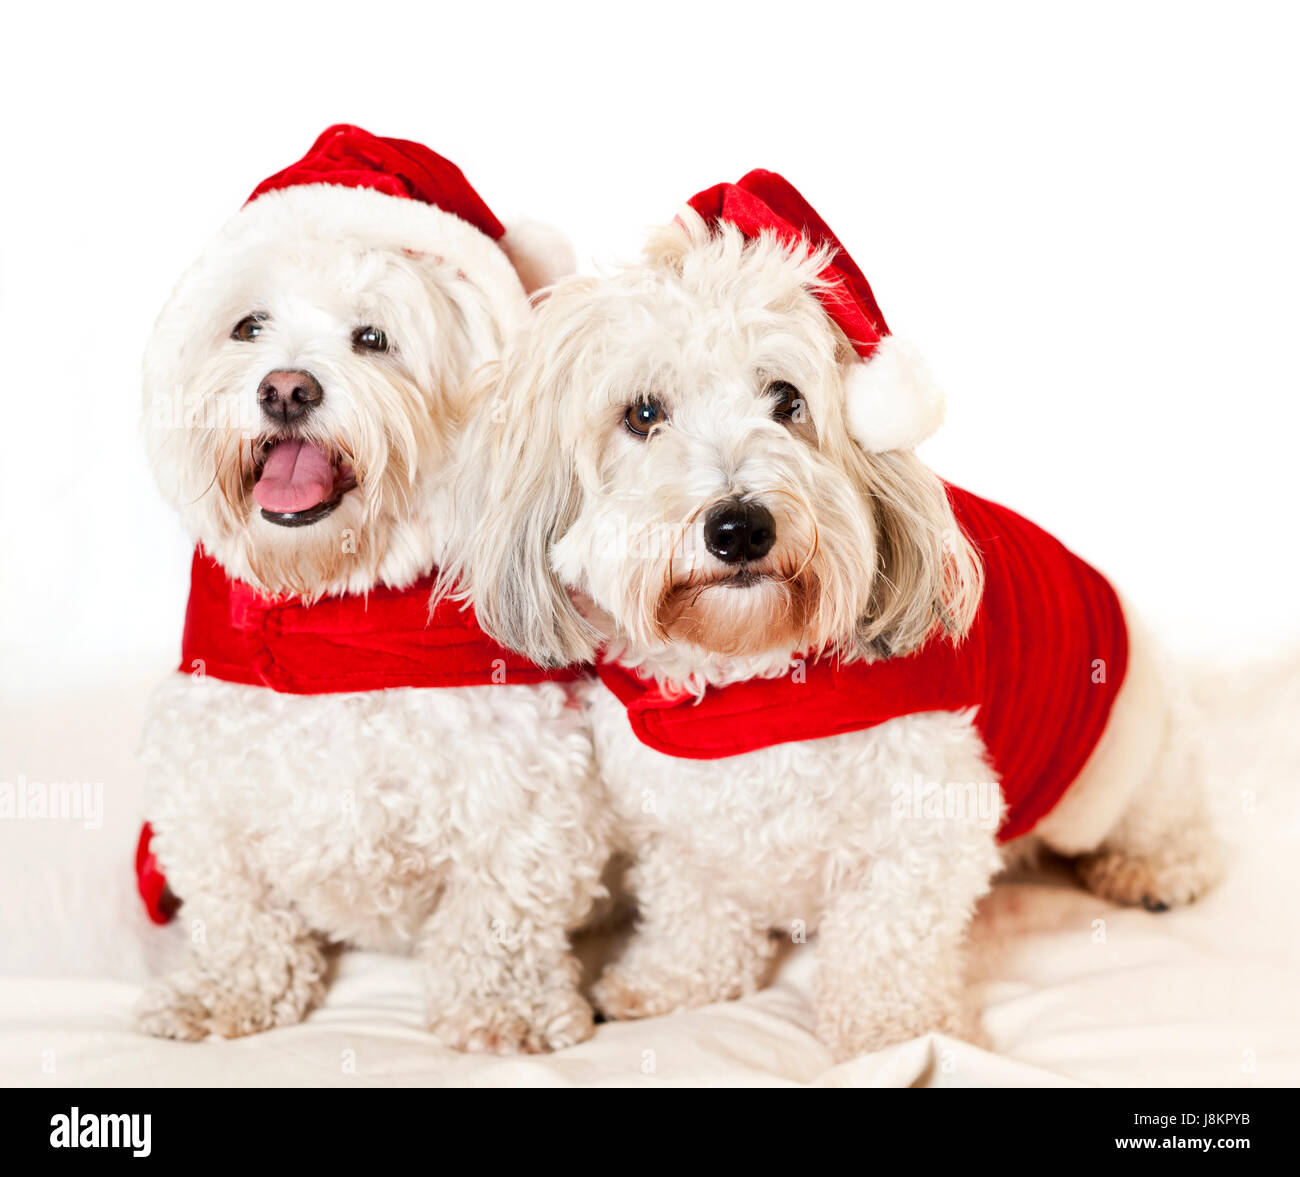 Perros con ropa navideña fotografías e imágenes de alta resolución - Alamy